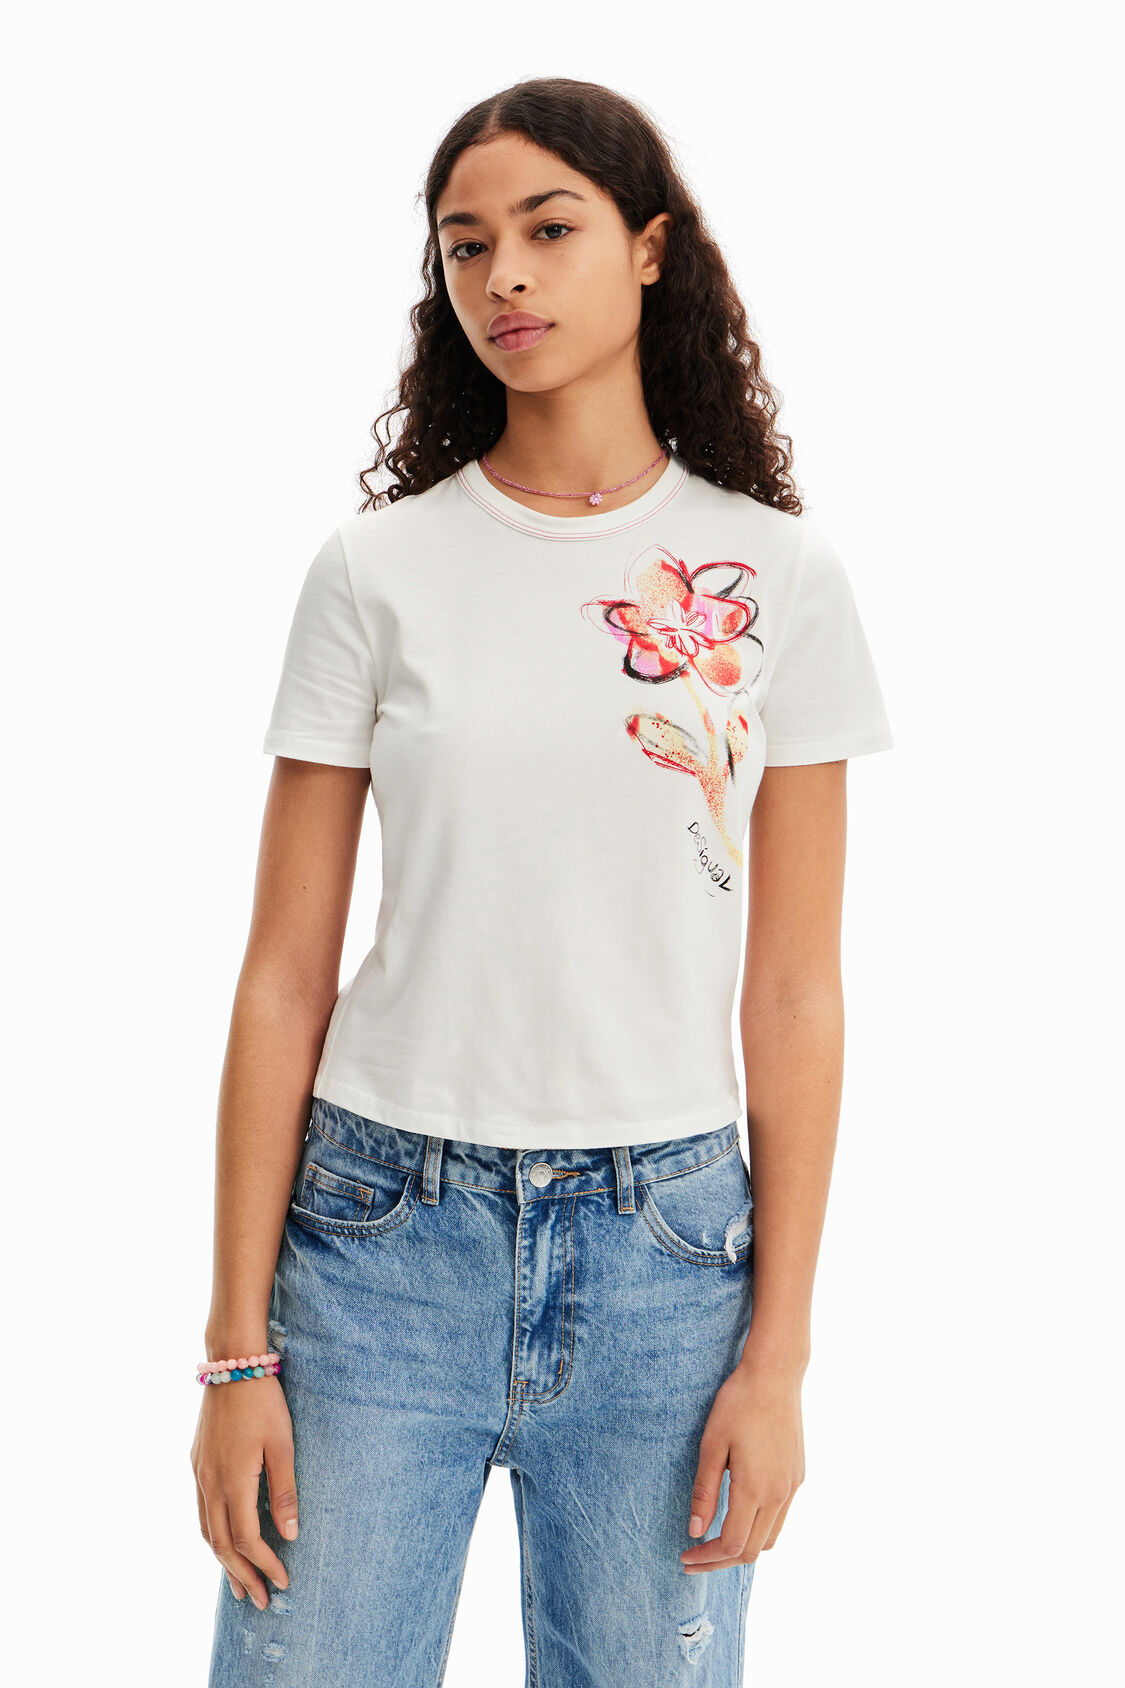 Camiseta corta flor de mujer Desigual.com